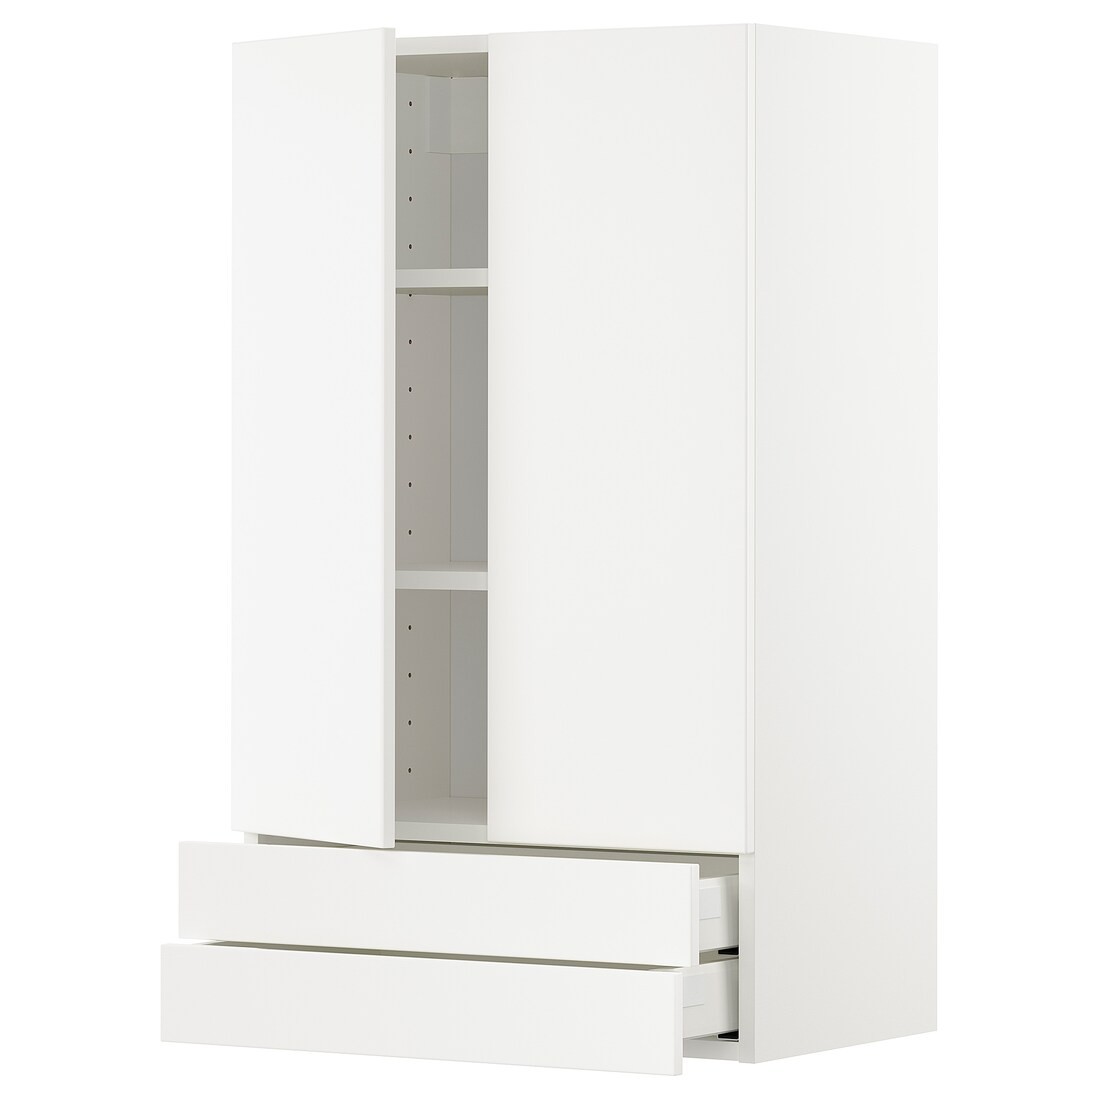 IKEA METOD МЕТОД / MAXIMERA МАКСИМЕРА Навесной шкаф / 2 дверцы / 2 ящика, белый / Veddinge белый, 60x100 см 79467062 794.670.62